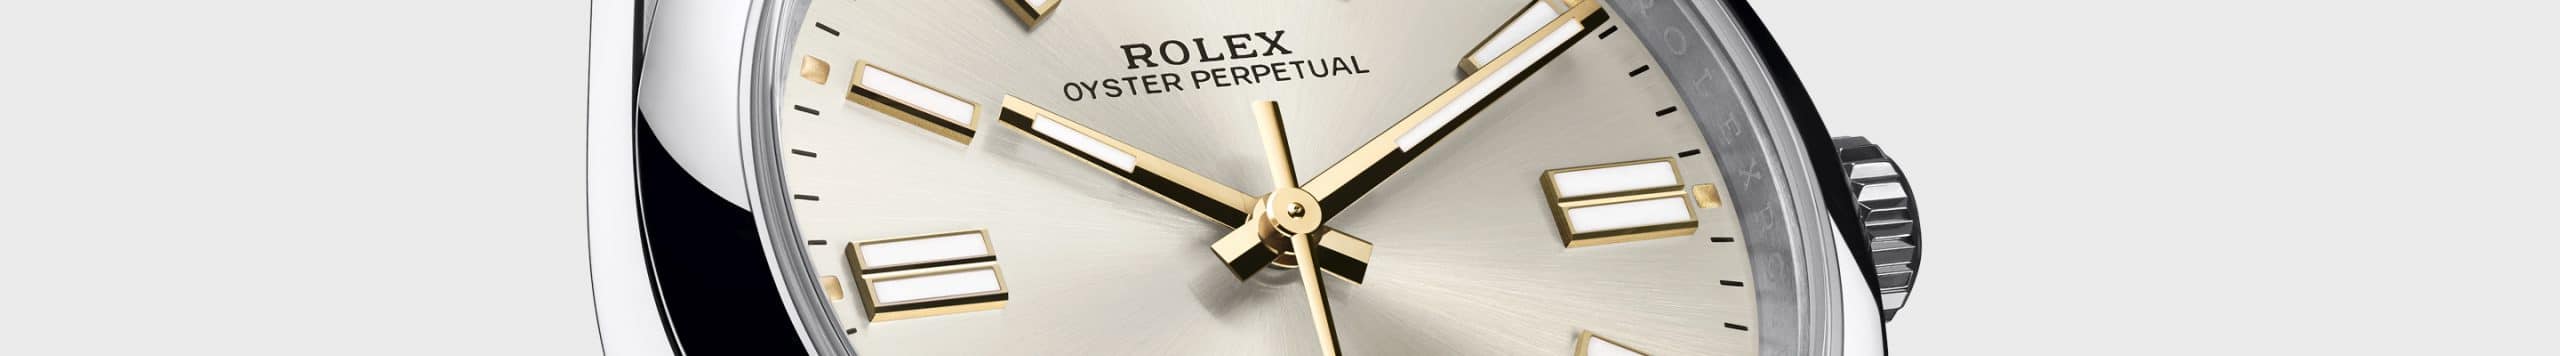 Banner นาฬิกา Rolex Oyster Perpetual - Pendulum